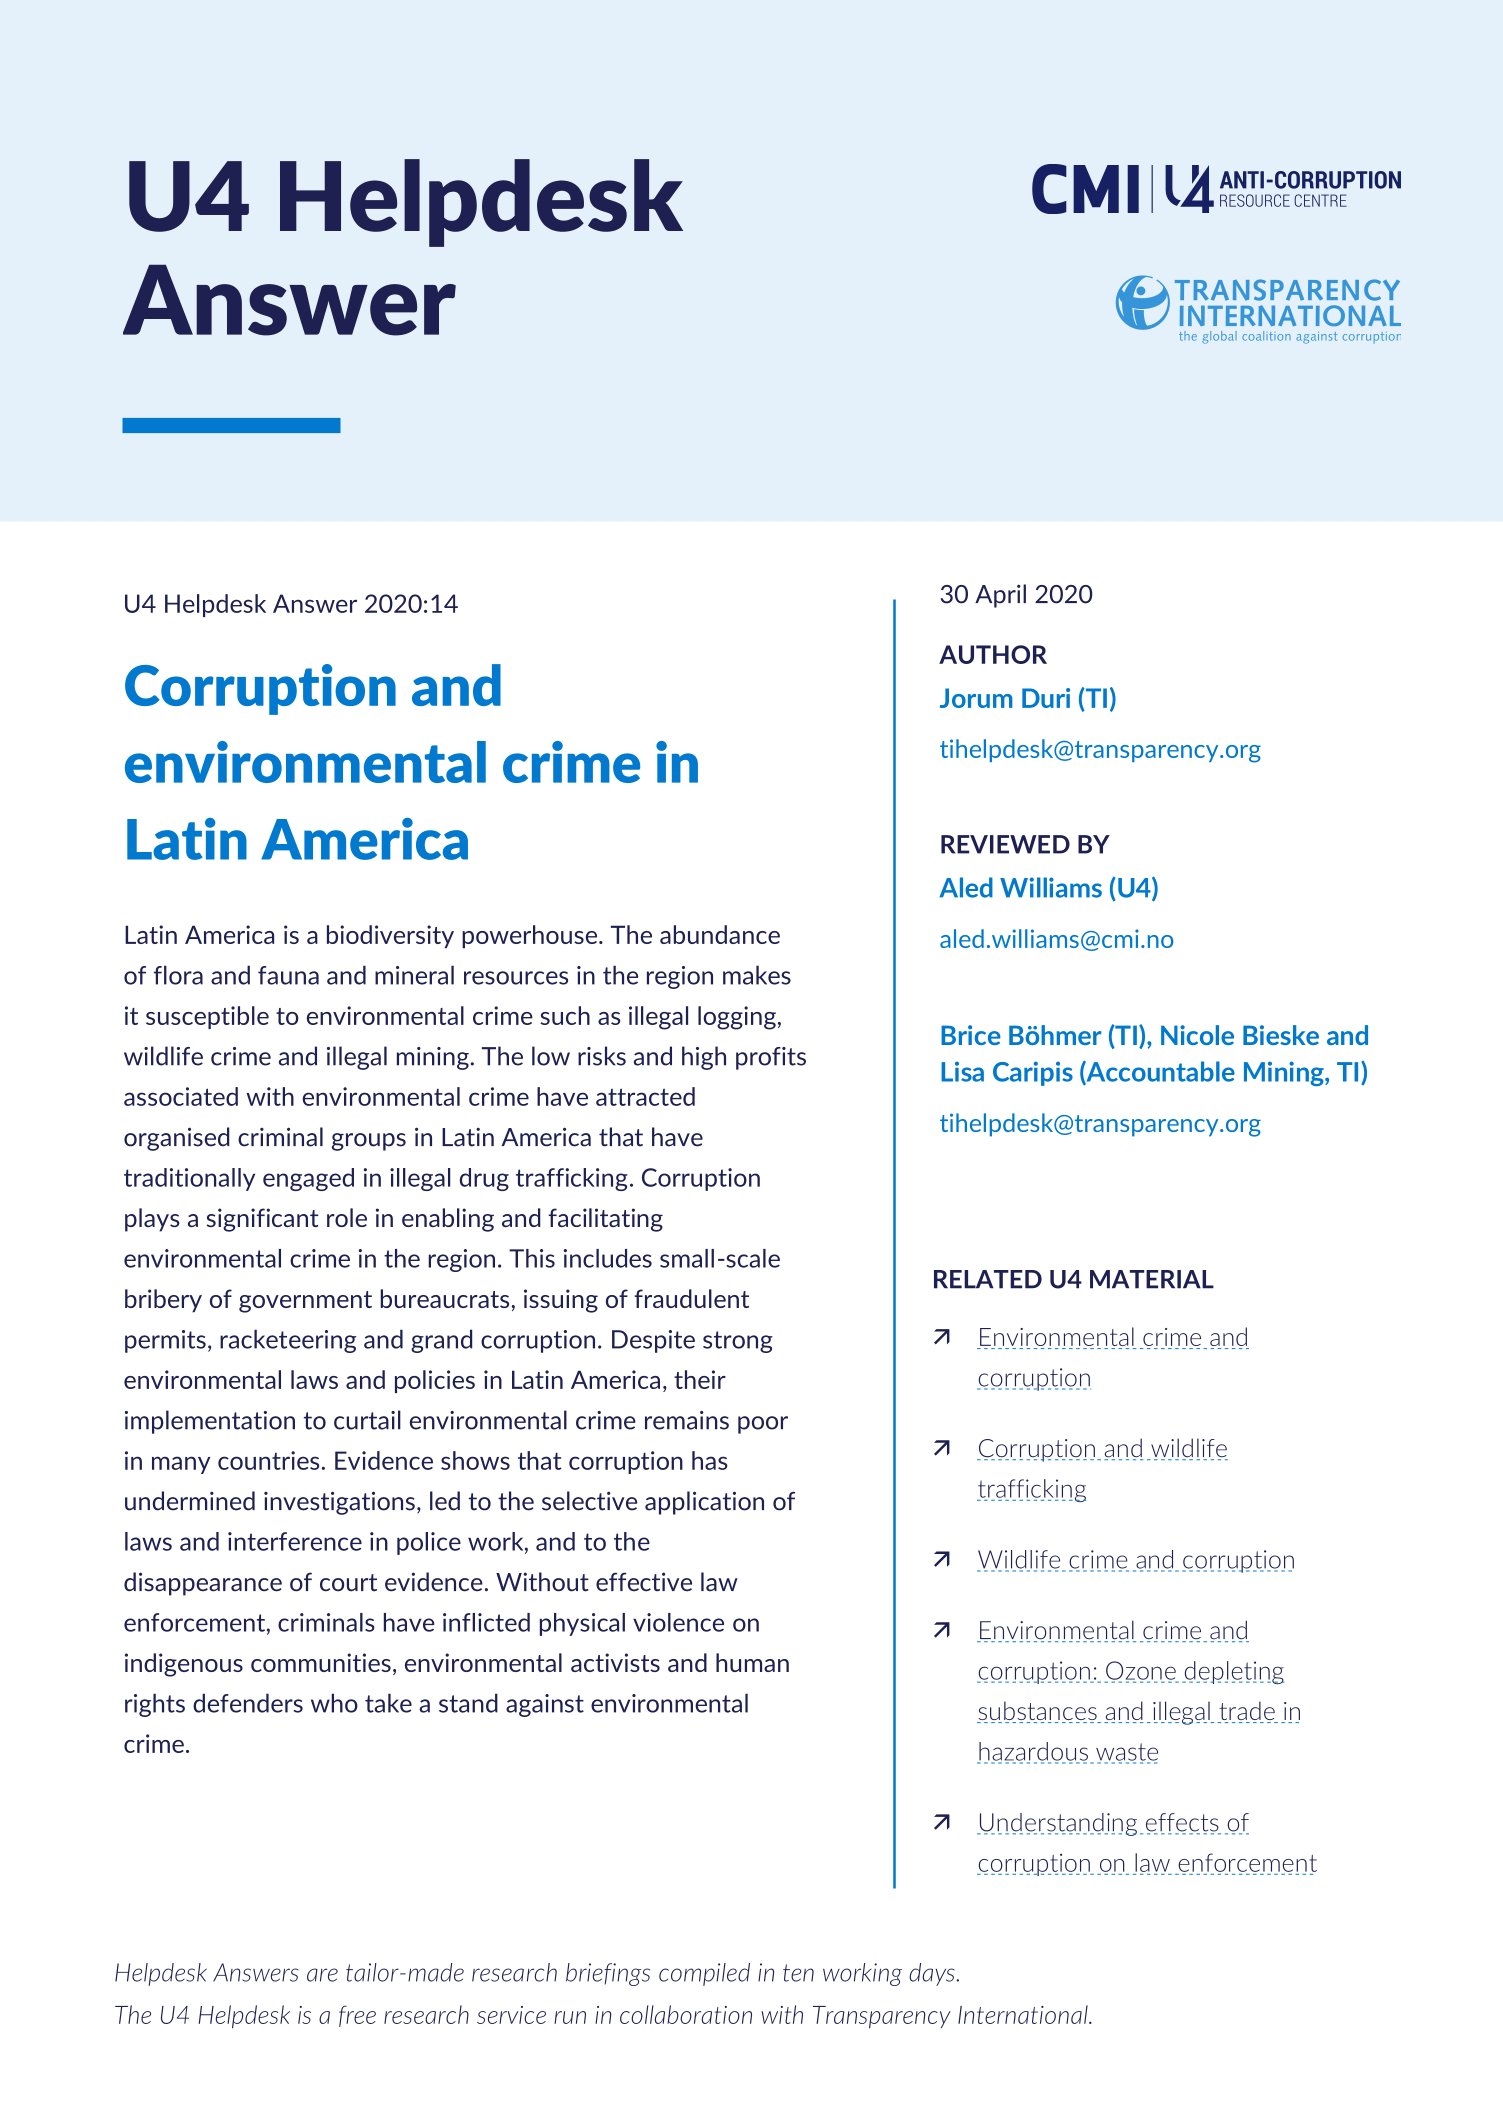 Corruption and environmental crime in Latin America